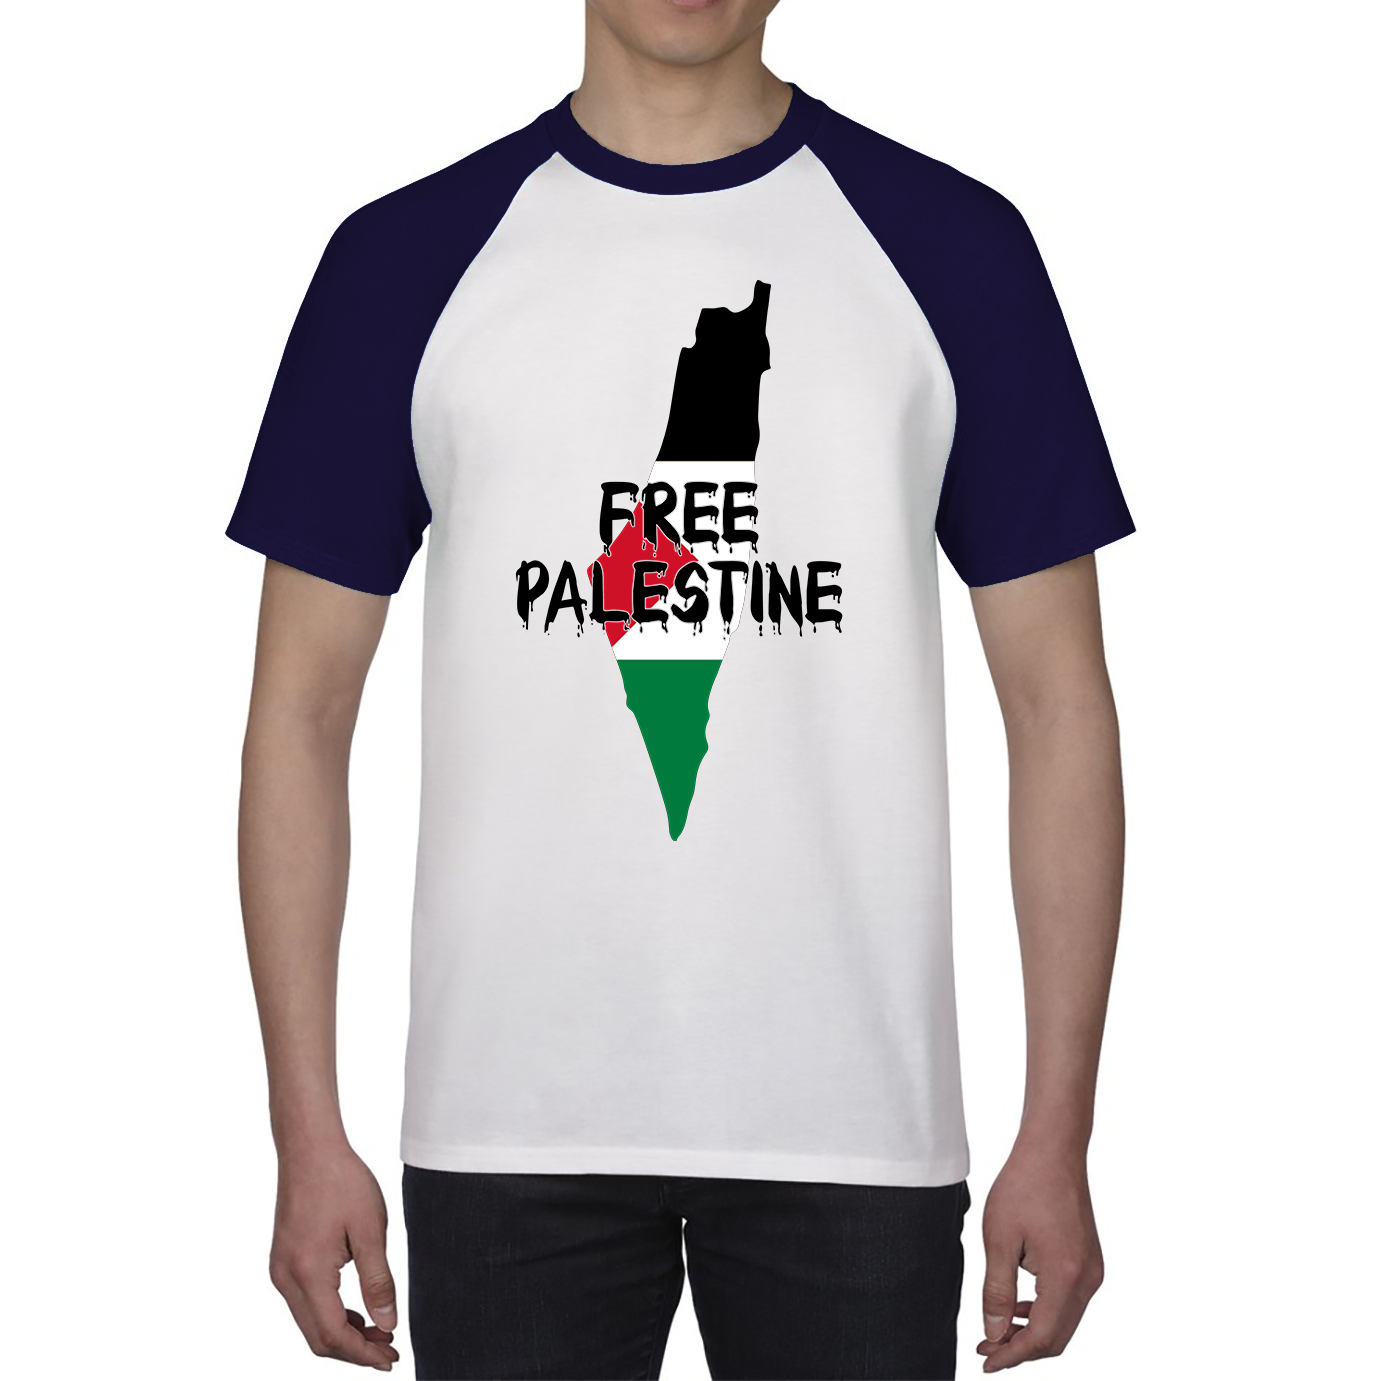 Free Palestine Stand With Palestine Muslim Lives Matter End Israeli Occupation Freedom Baseball T Shirt